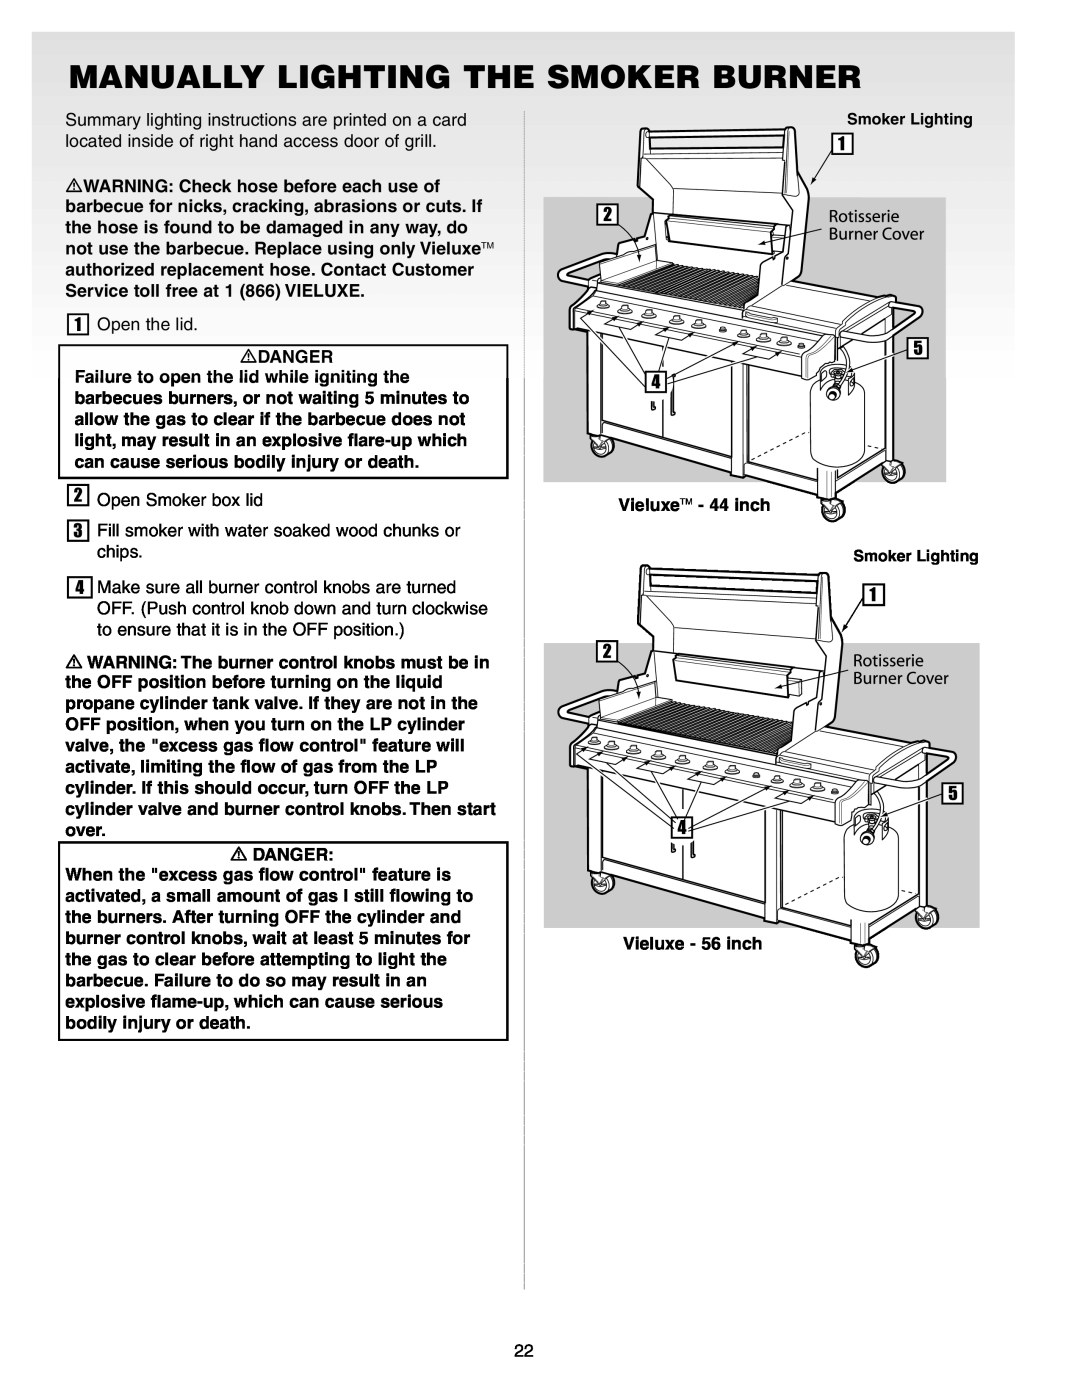 Weber Gas Burner manual Manually Lighting The Smoker Burner, 1Open the lid, 2Open Smoker box lid 